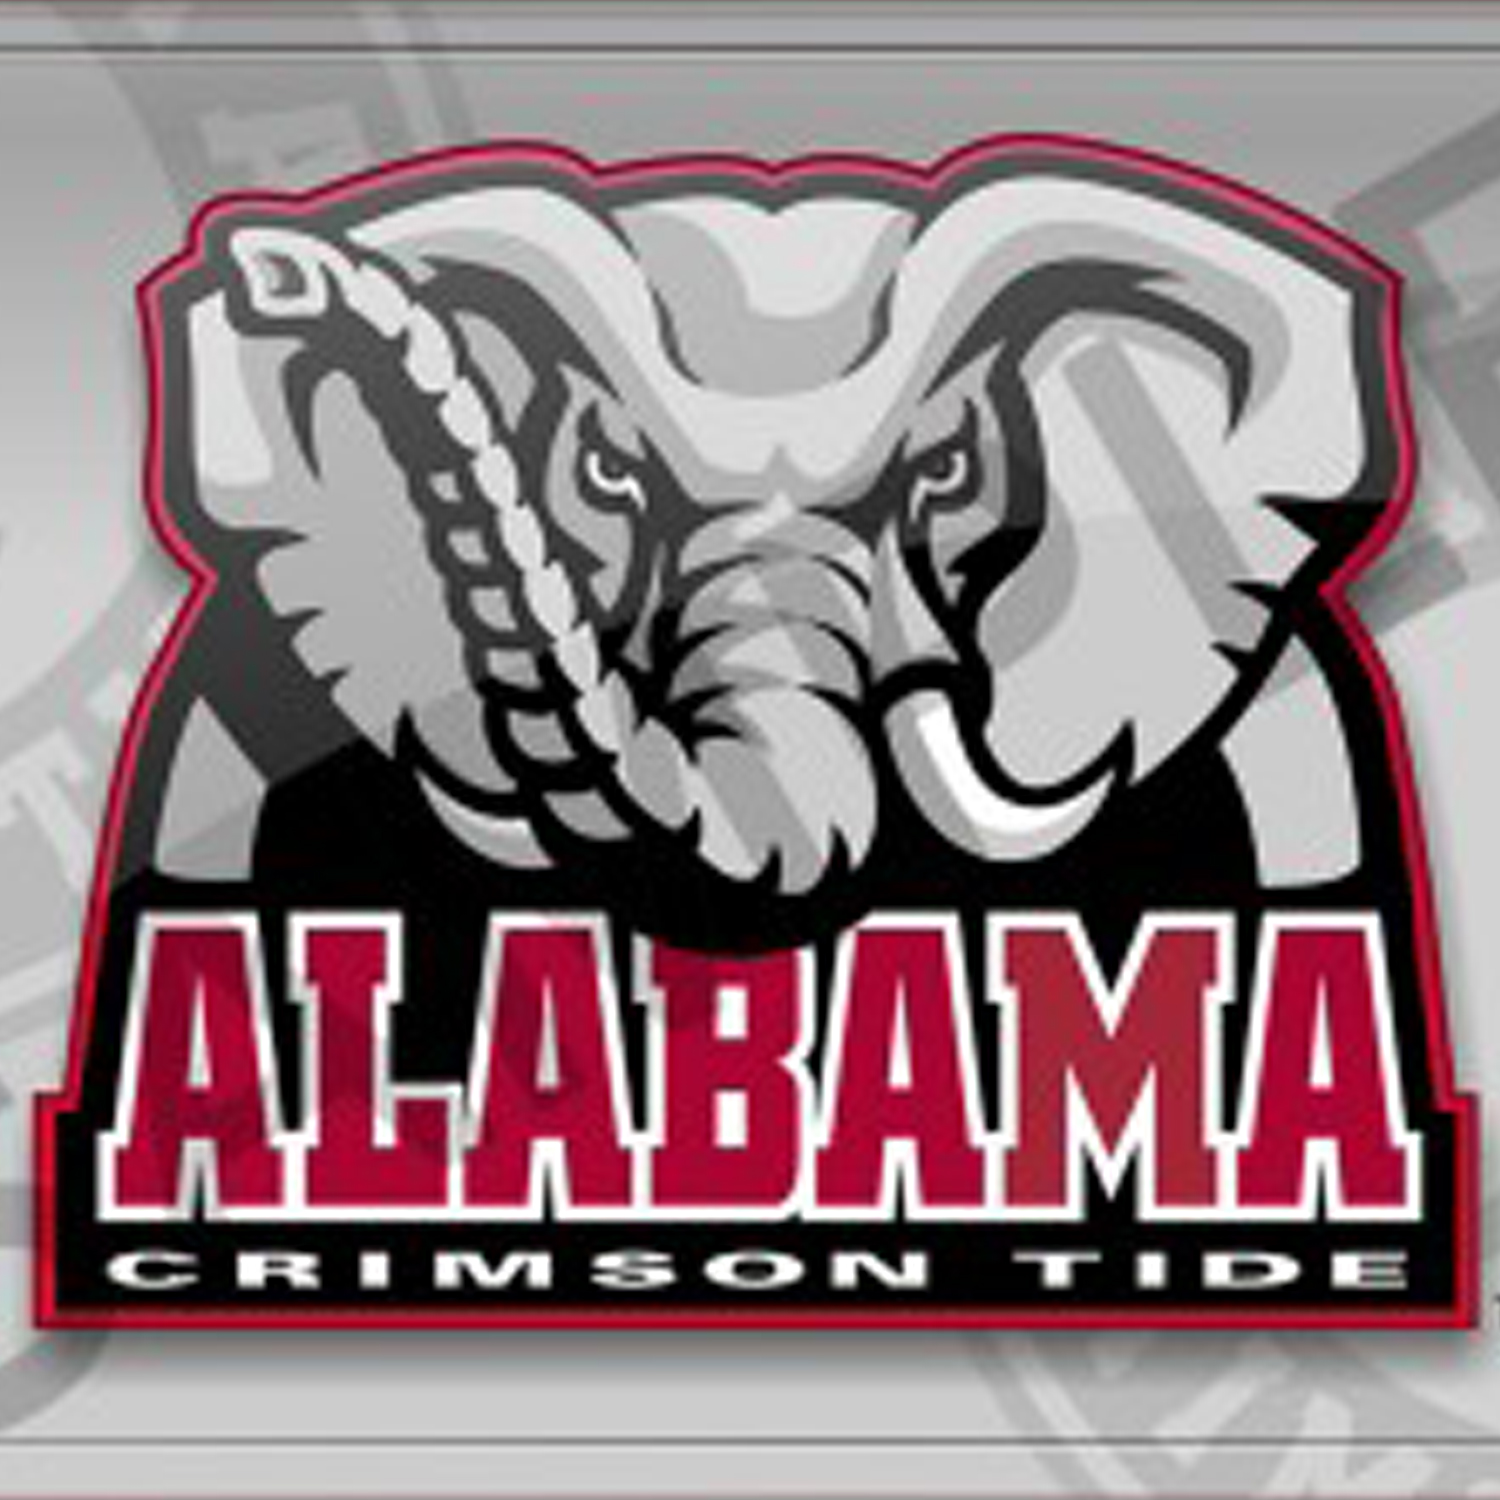 University Of Alabama No Pledging Activities Sourcefed